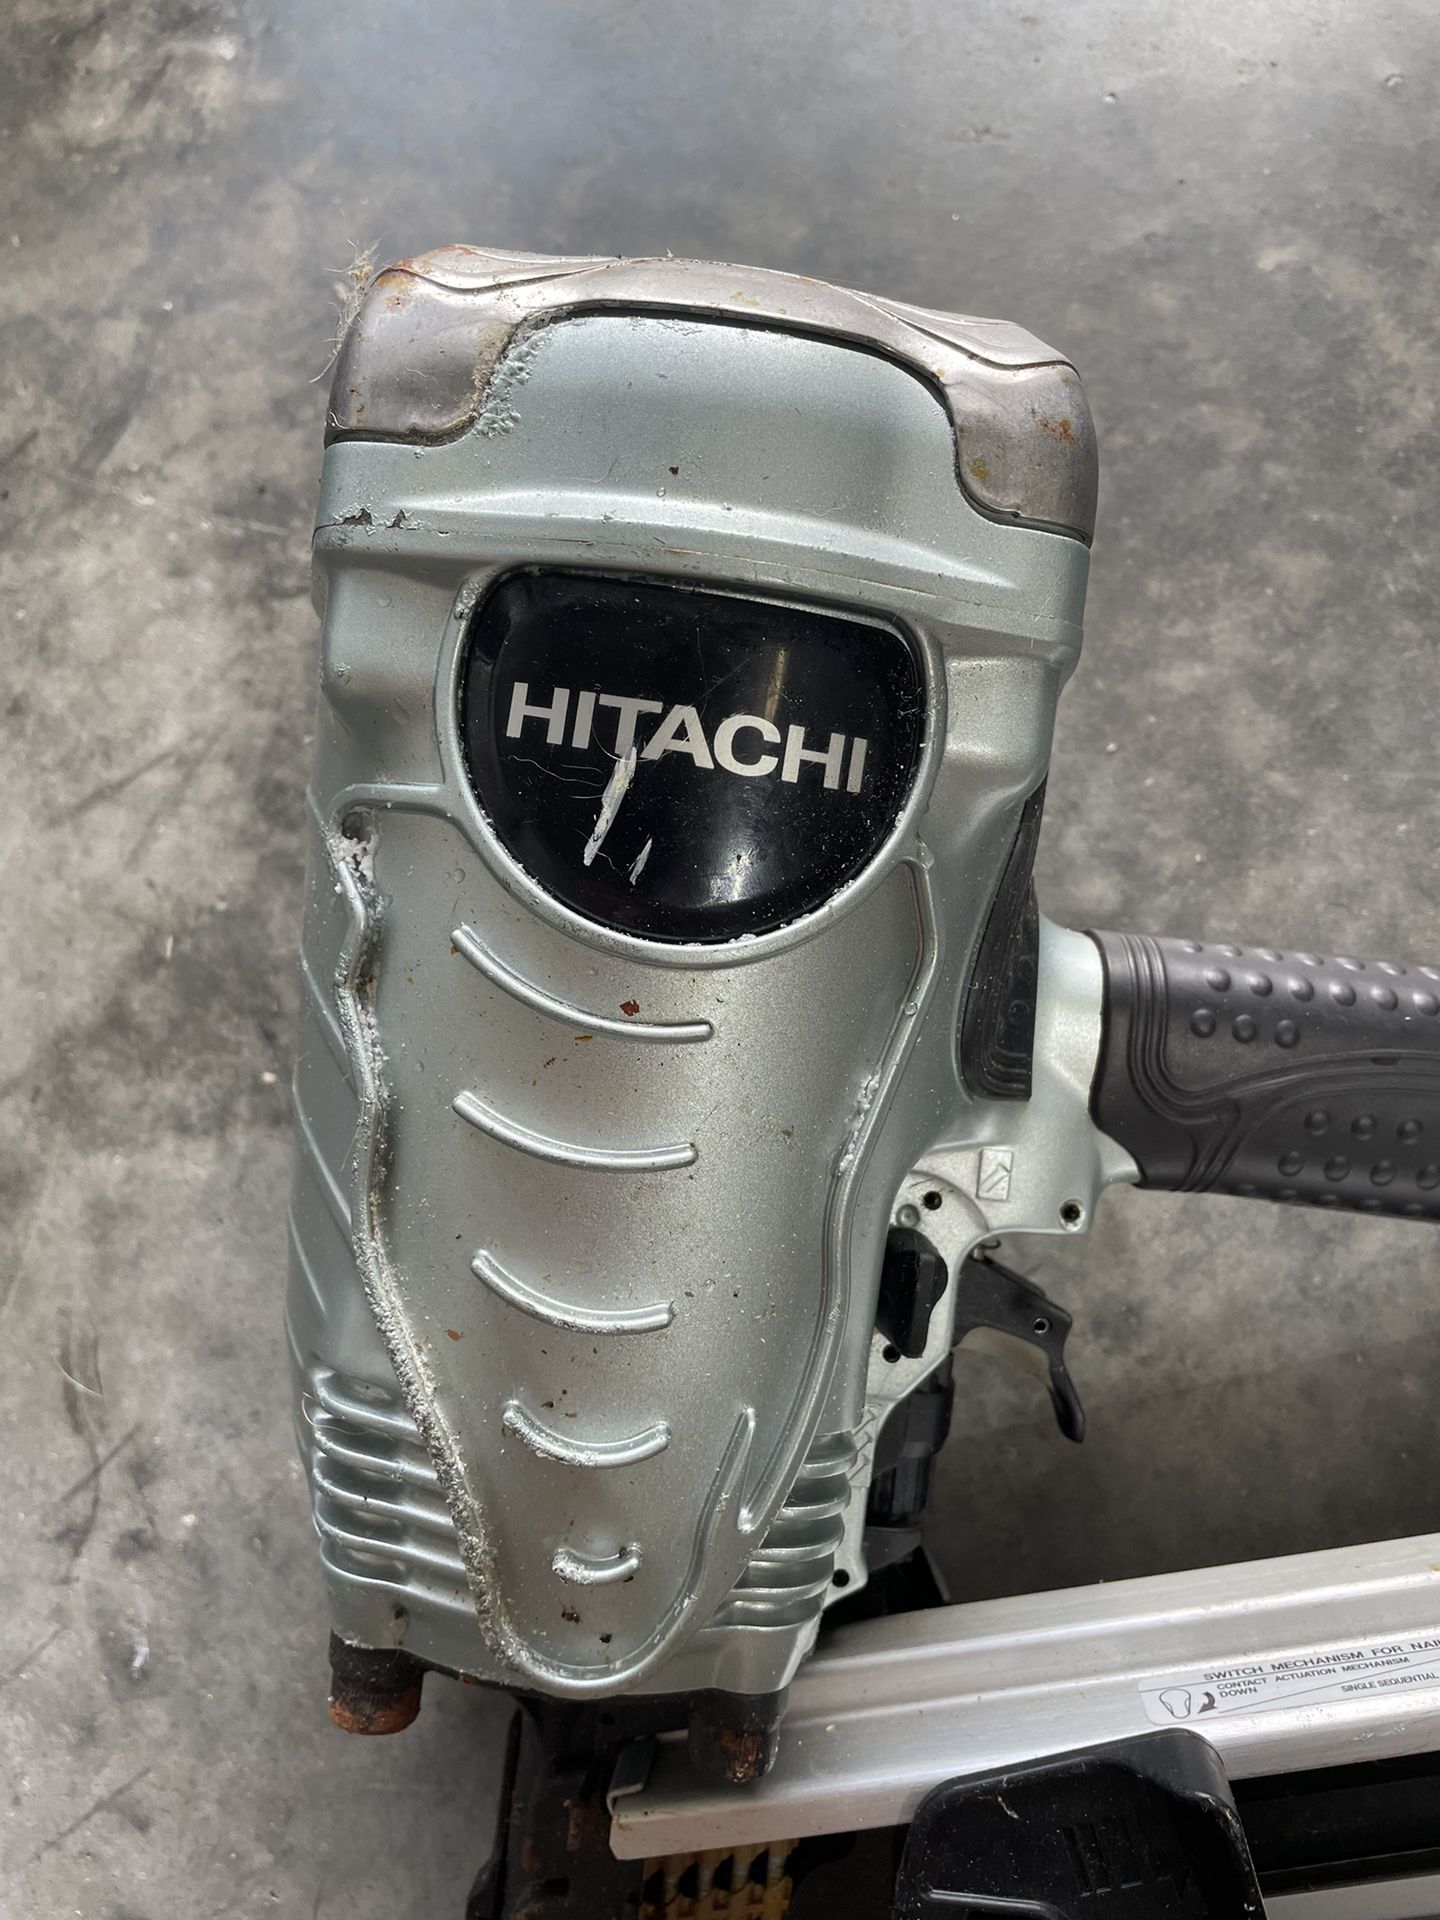 Hitachi NR90AE 3-1/2” Plastic Collated Framing Nailer